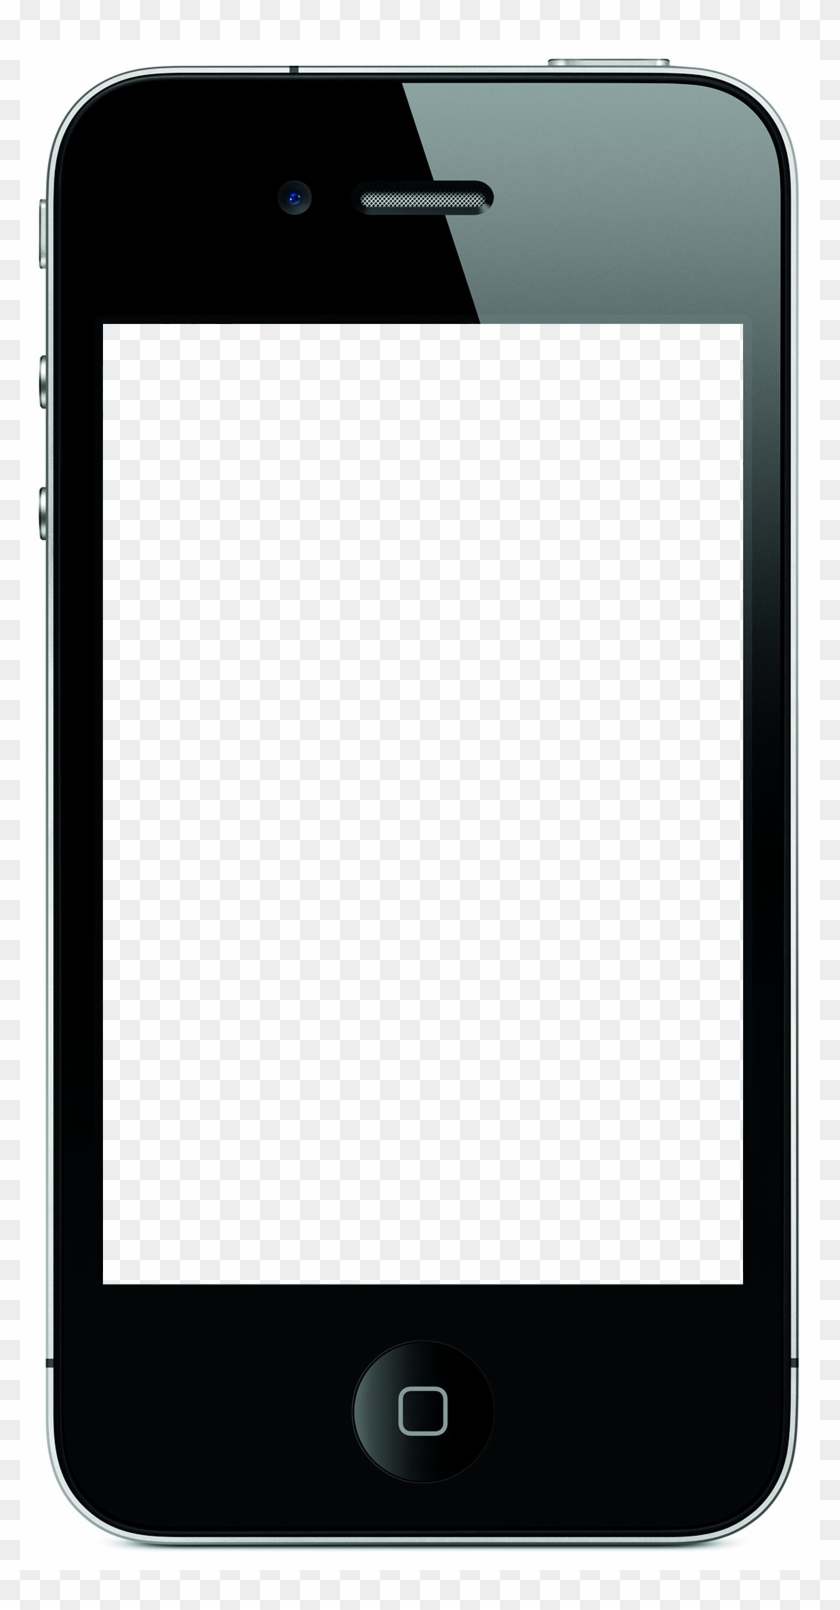 Iphone Background Image - Iphone 5 Transparent Background #1031050